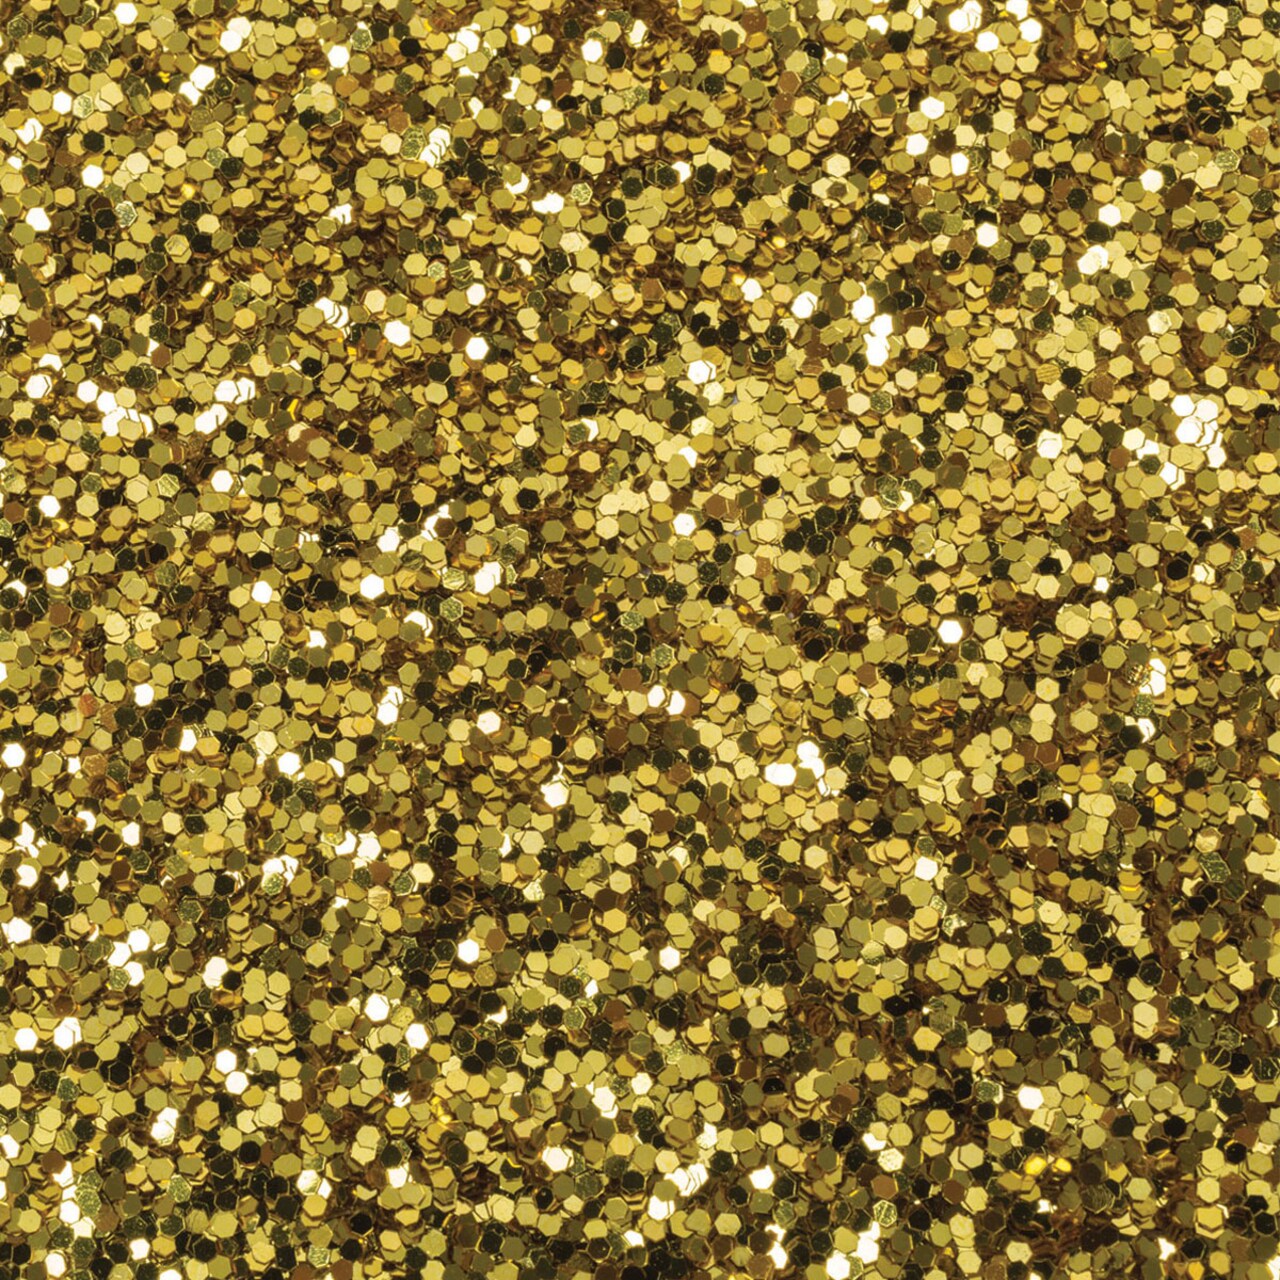 Spectra Sparkling Crystals Glitter - 16 oz, Gold